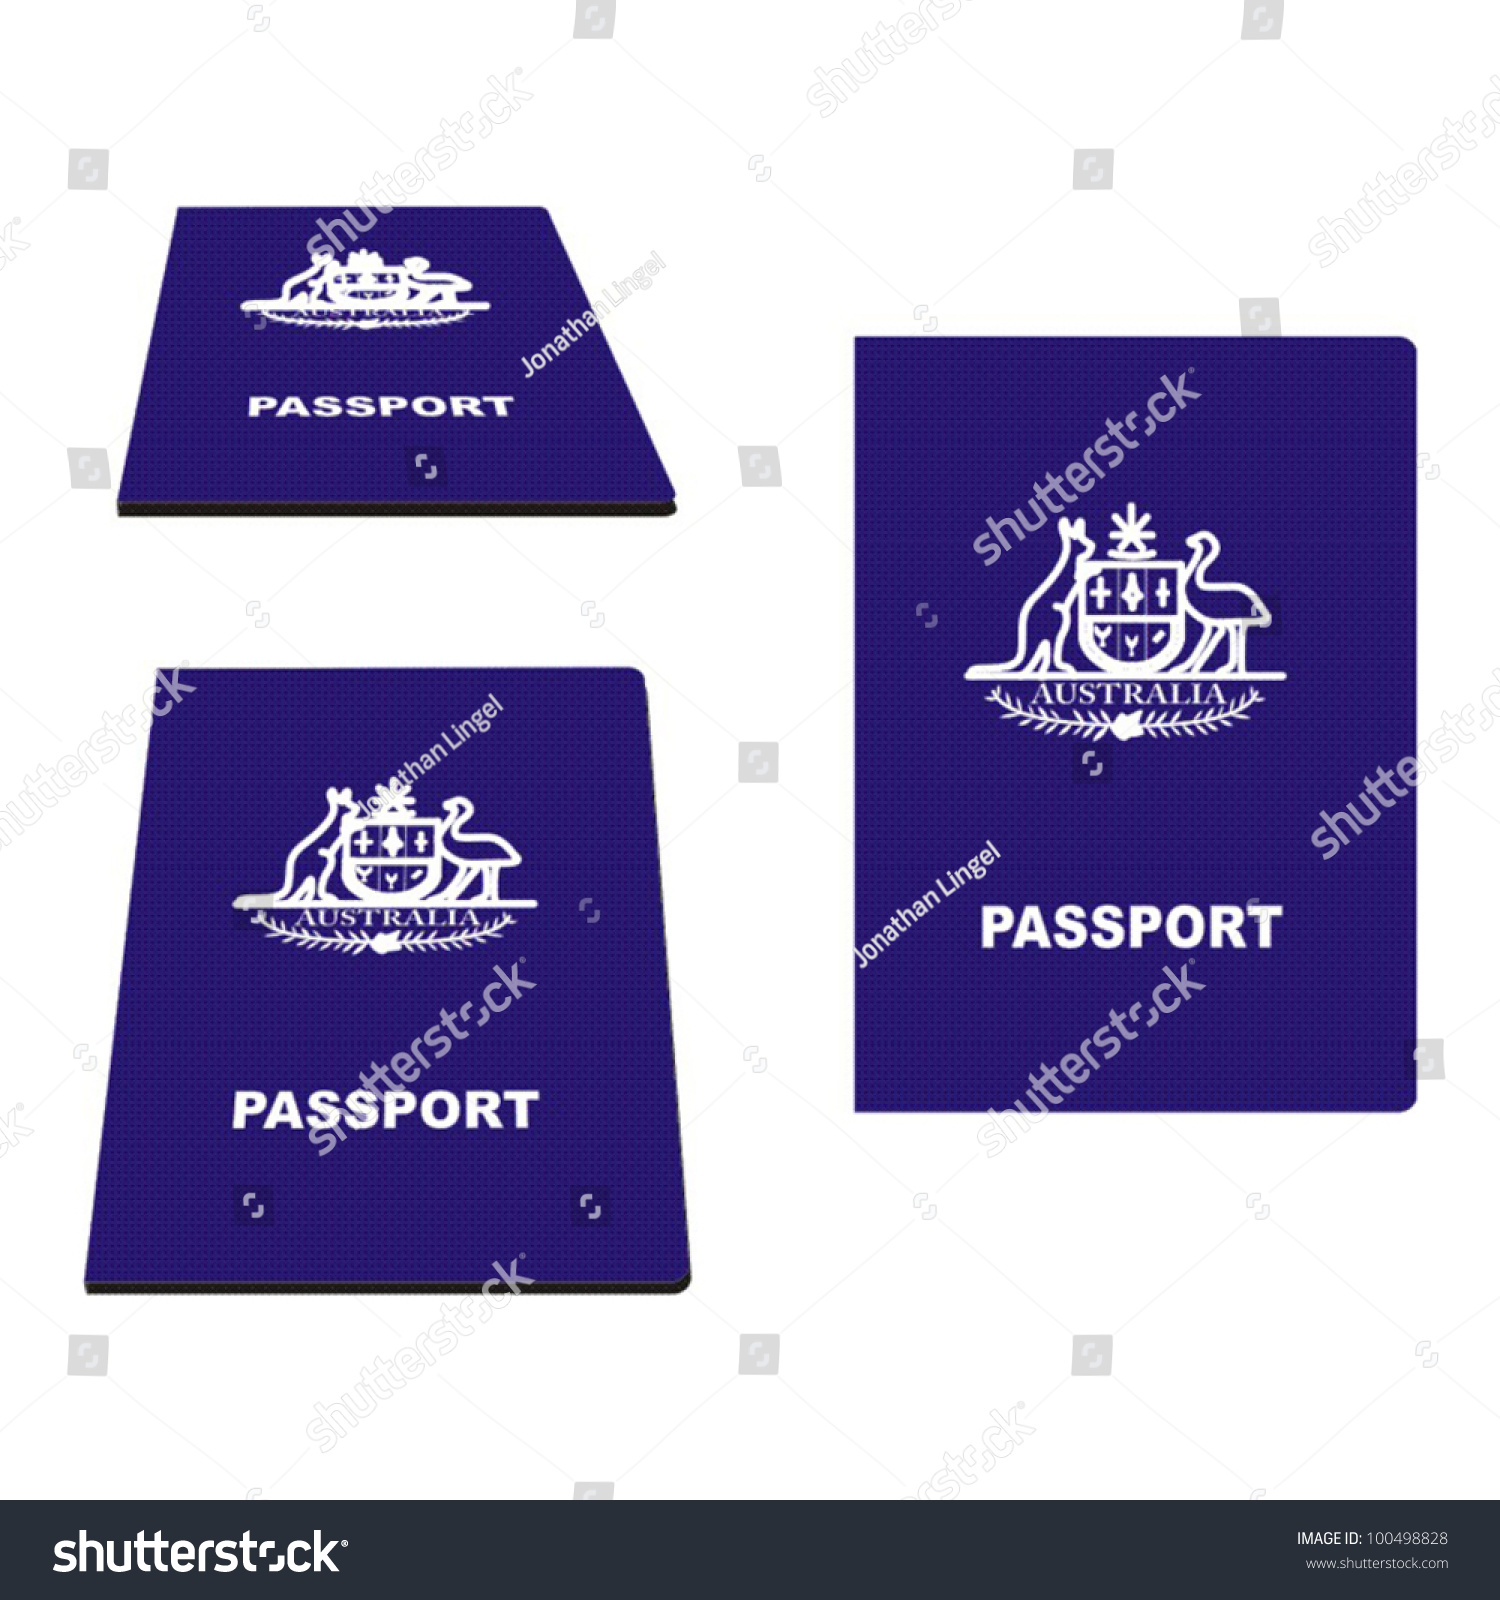 Australian Passport Vector Illustration Royalty Free Stock Vector 100498828 2702